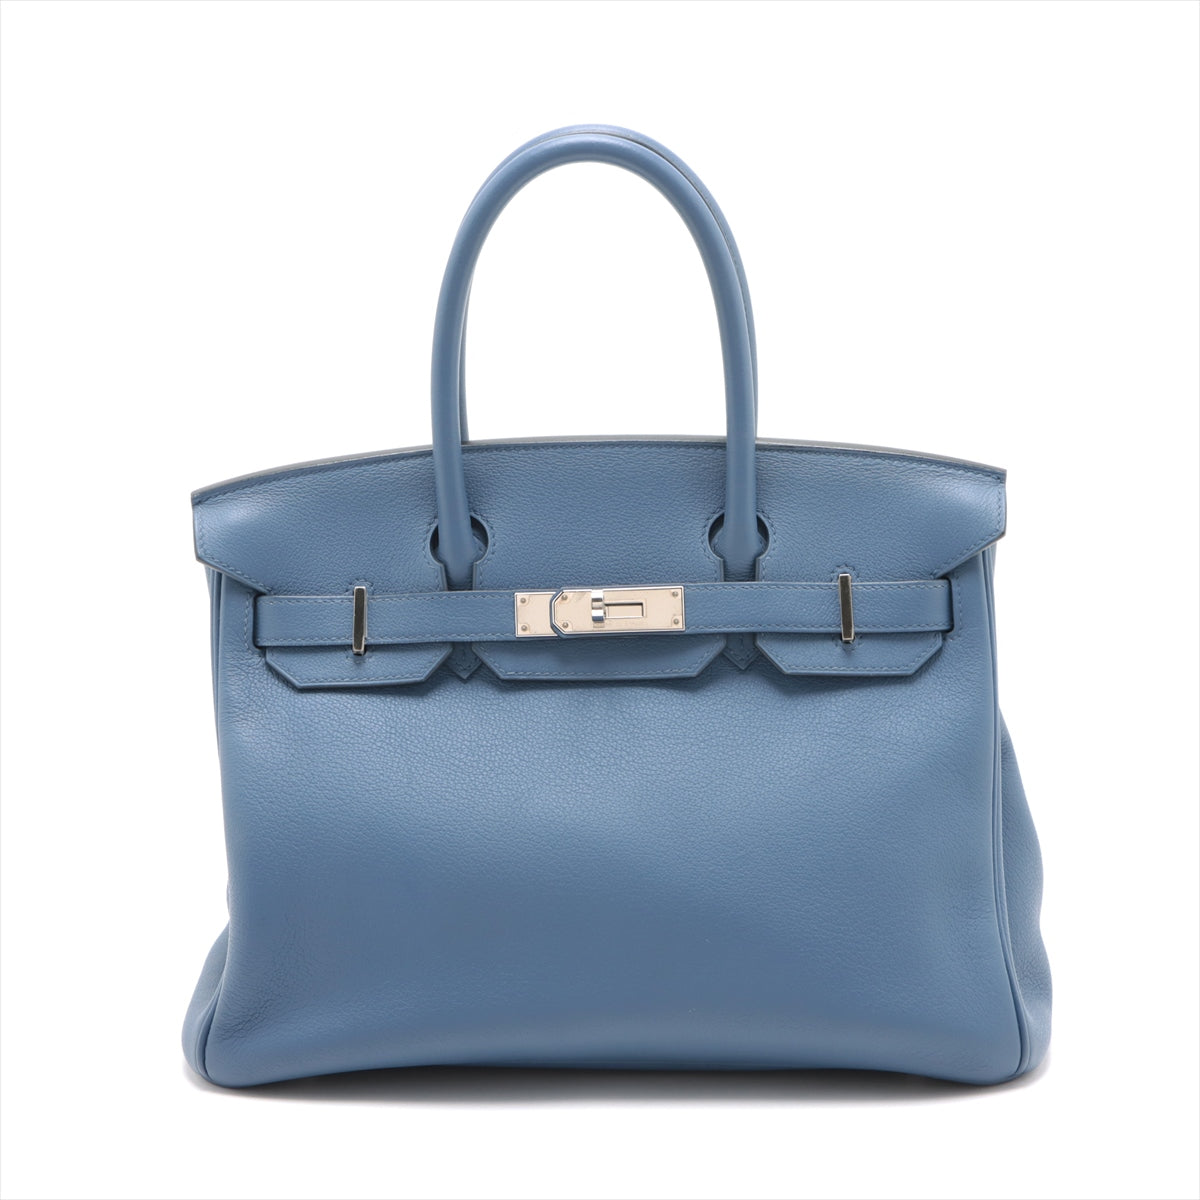 Hermès Birkin 30 Ever color Blue brighton Silver Metal fittings C: 2018